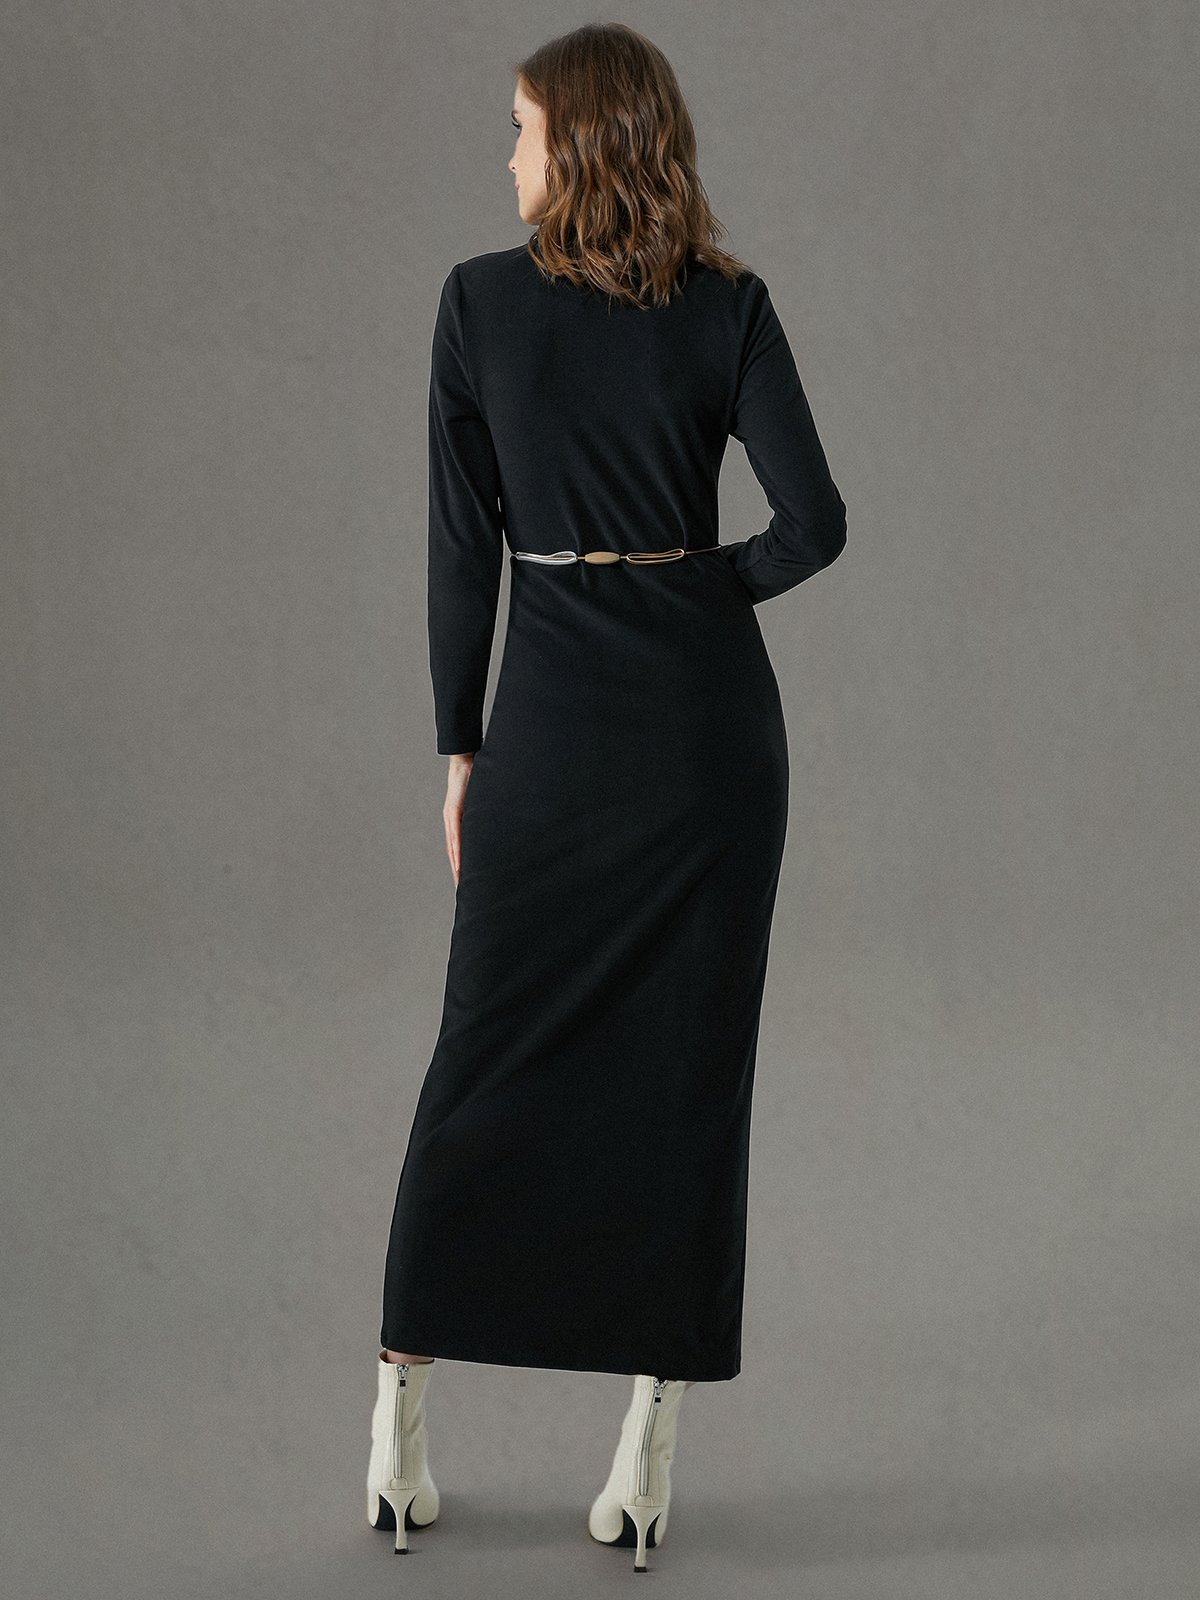 Urban Turtleneck Plain Long Sleeve Maxi Dress With No Belt